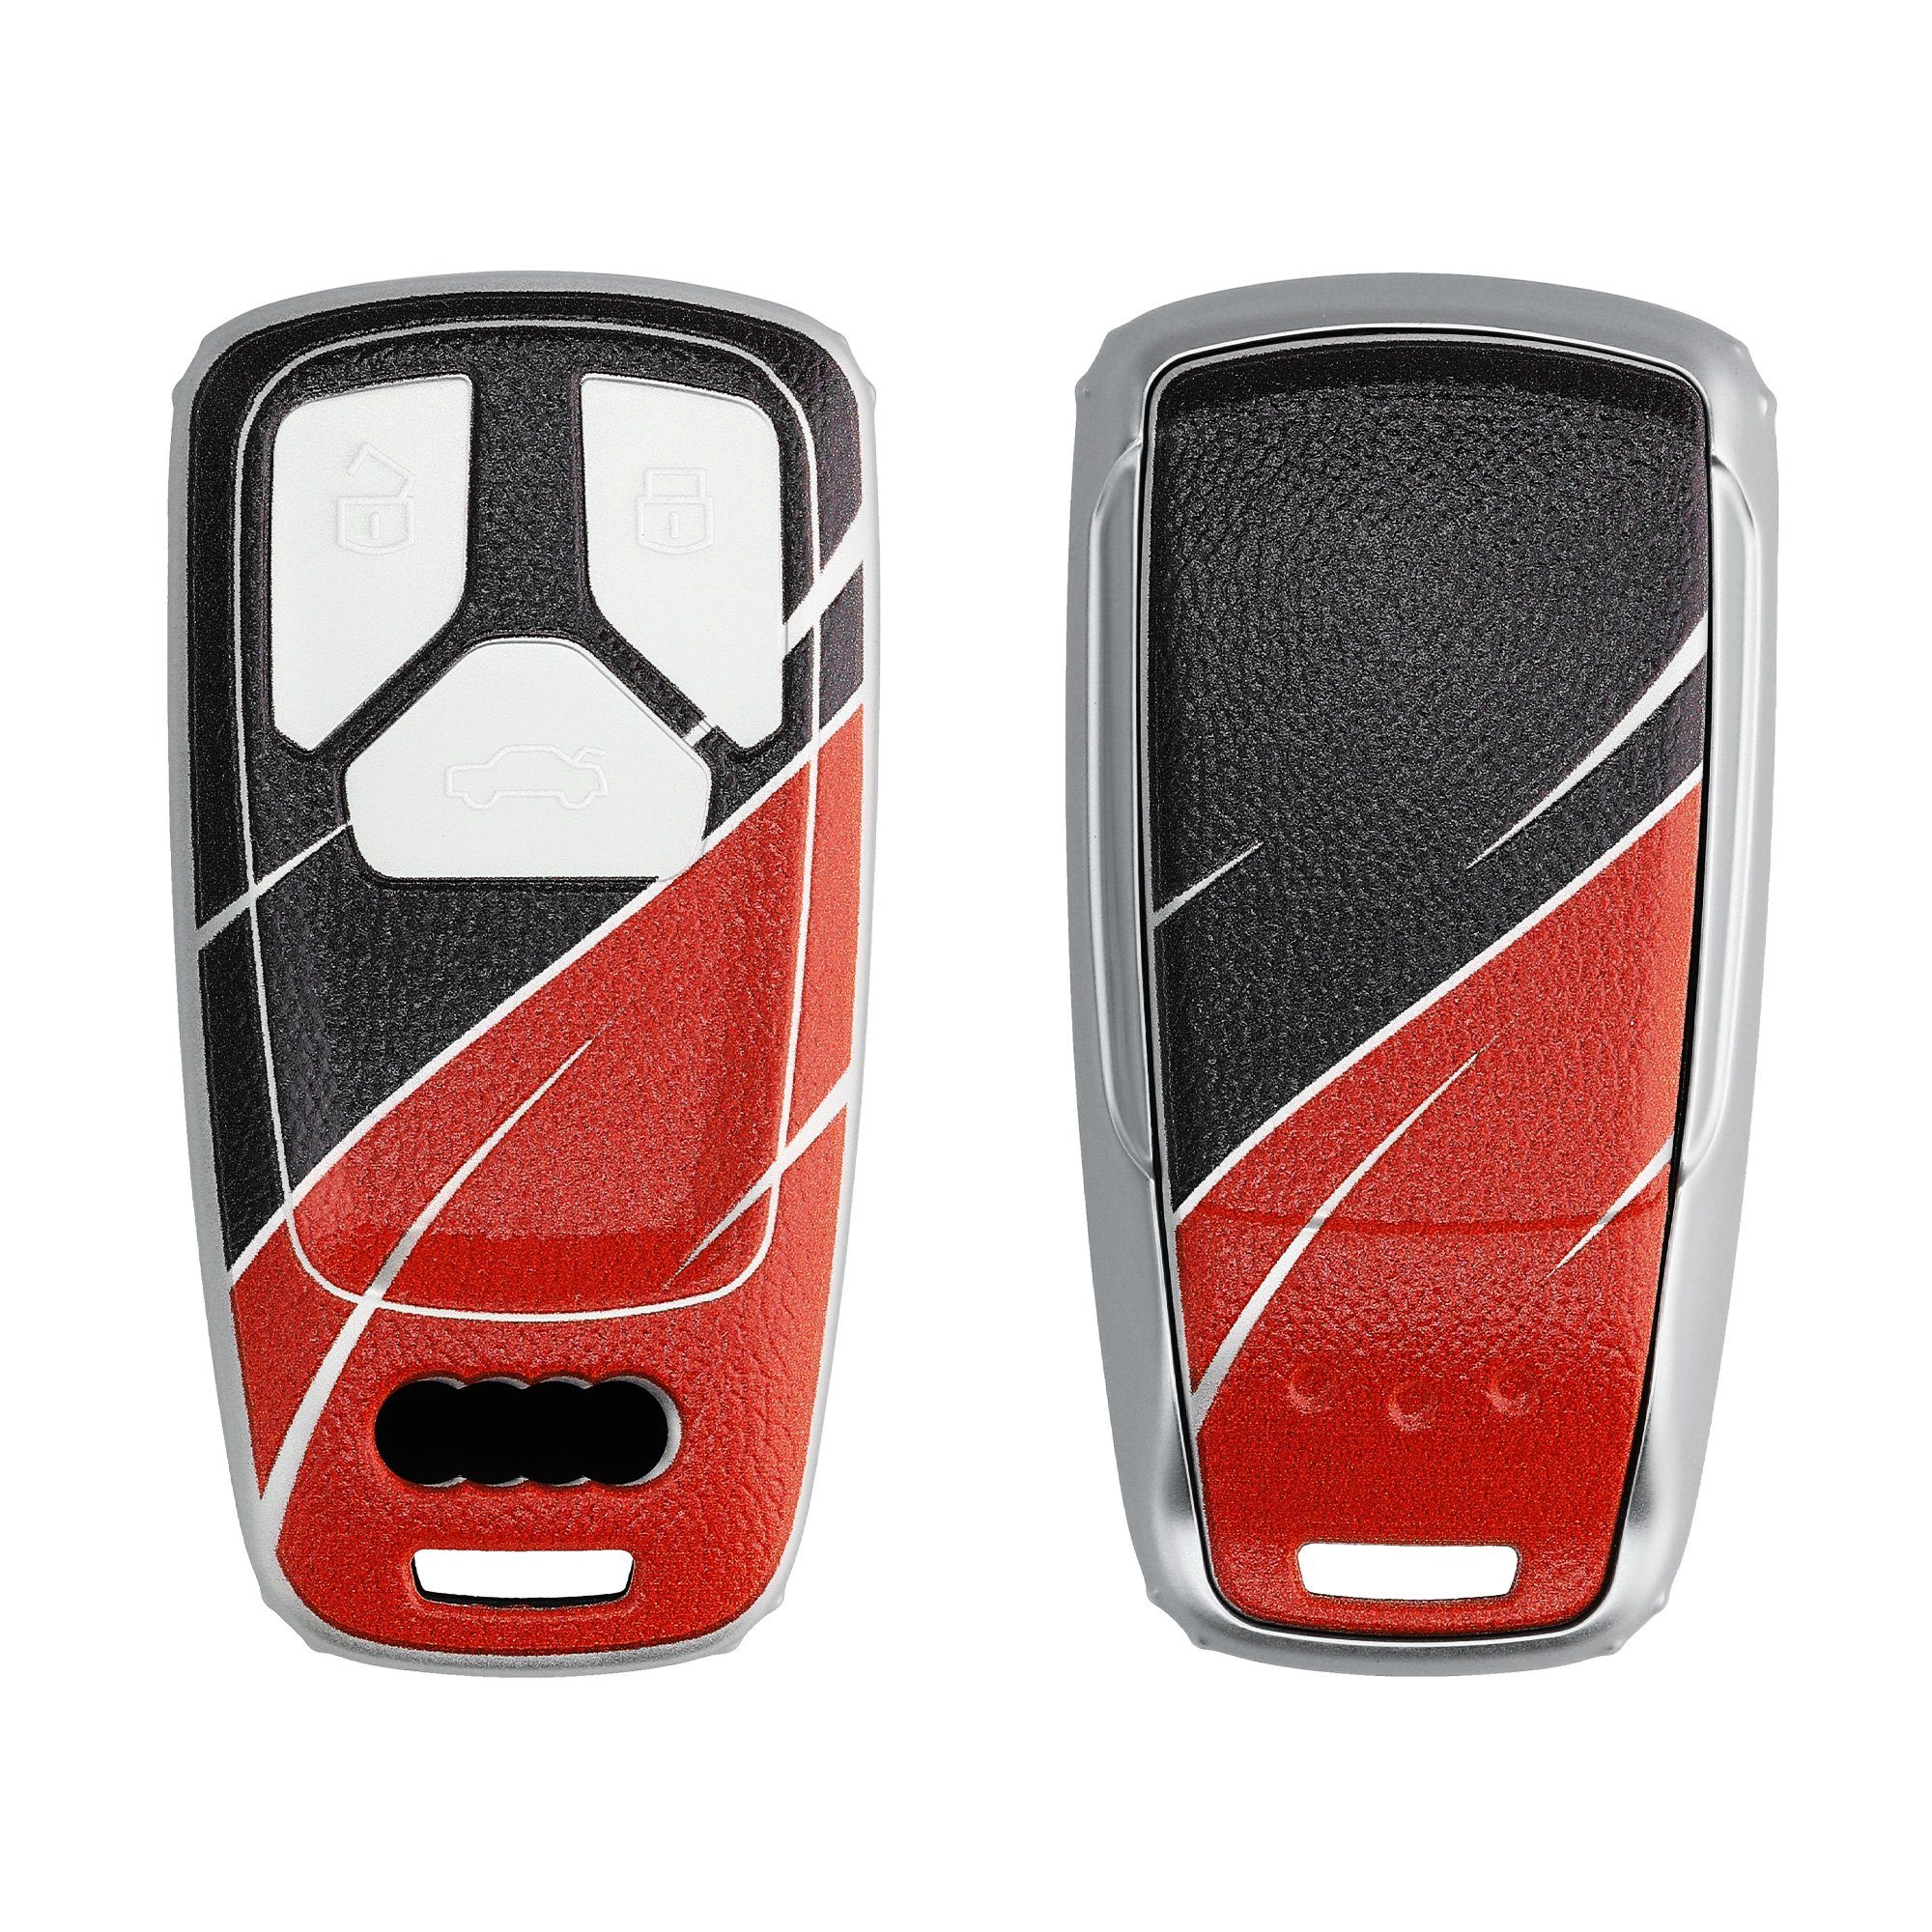 Hülle für Audi Autoschlüssel Silikon Schutzhülle Schlüssel Case Cover